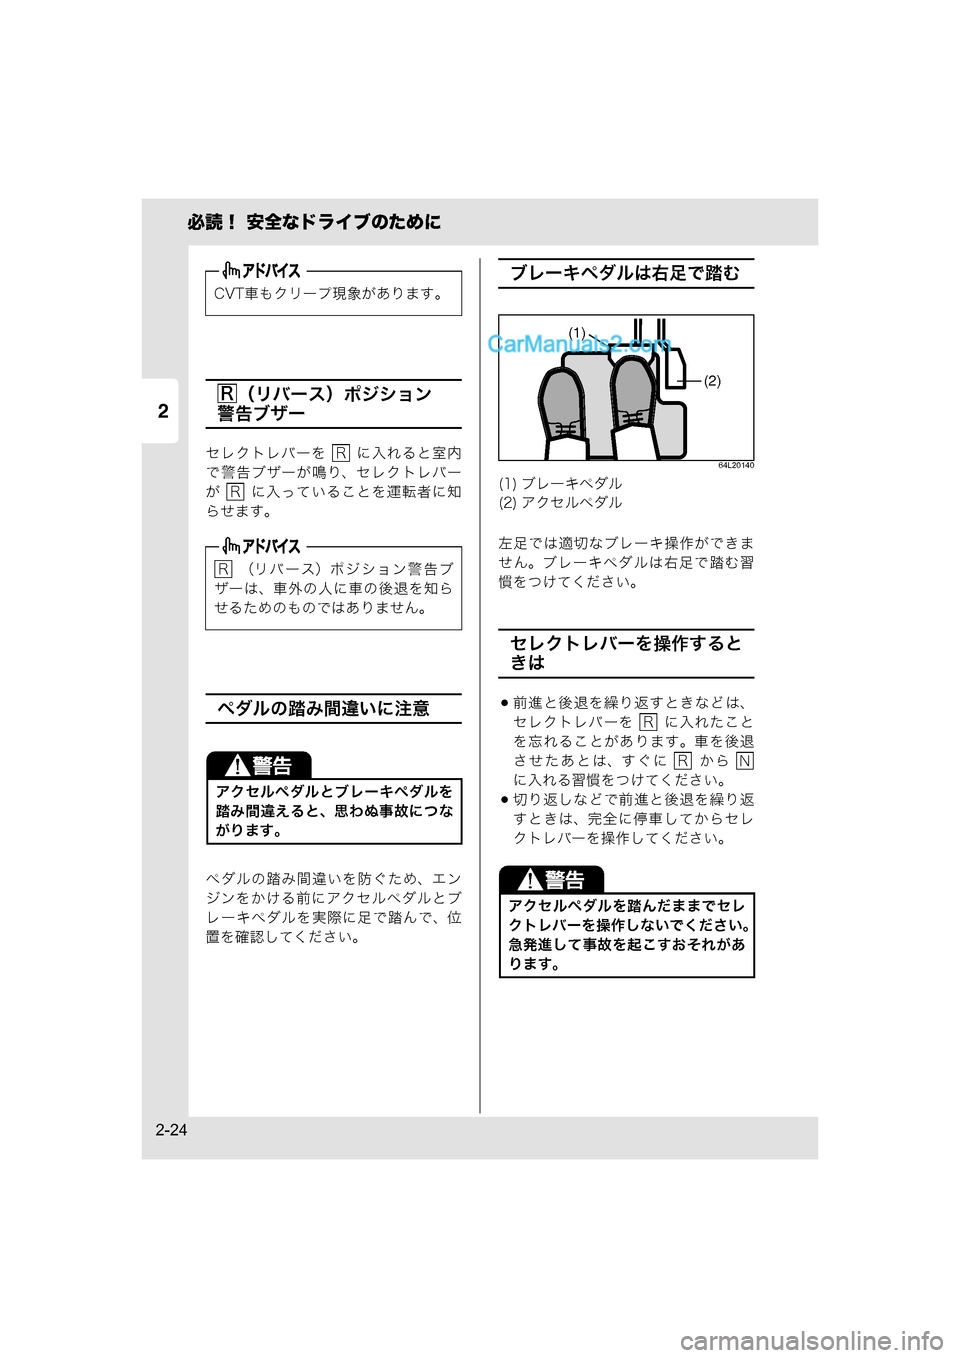 MAZDA MODEL CARROL 2015  取扱説明書 (キャロル) (in Japanese) 2
必読！ 安全なドライブのために
2-24
（リバース）ポジション
警告ブザー
セレクトレバーを    に入れると室内
で警告ブザーが鳴り、セレクトレバ�